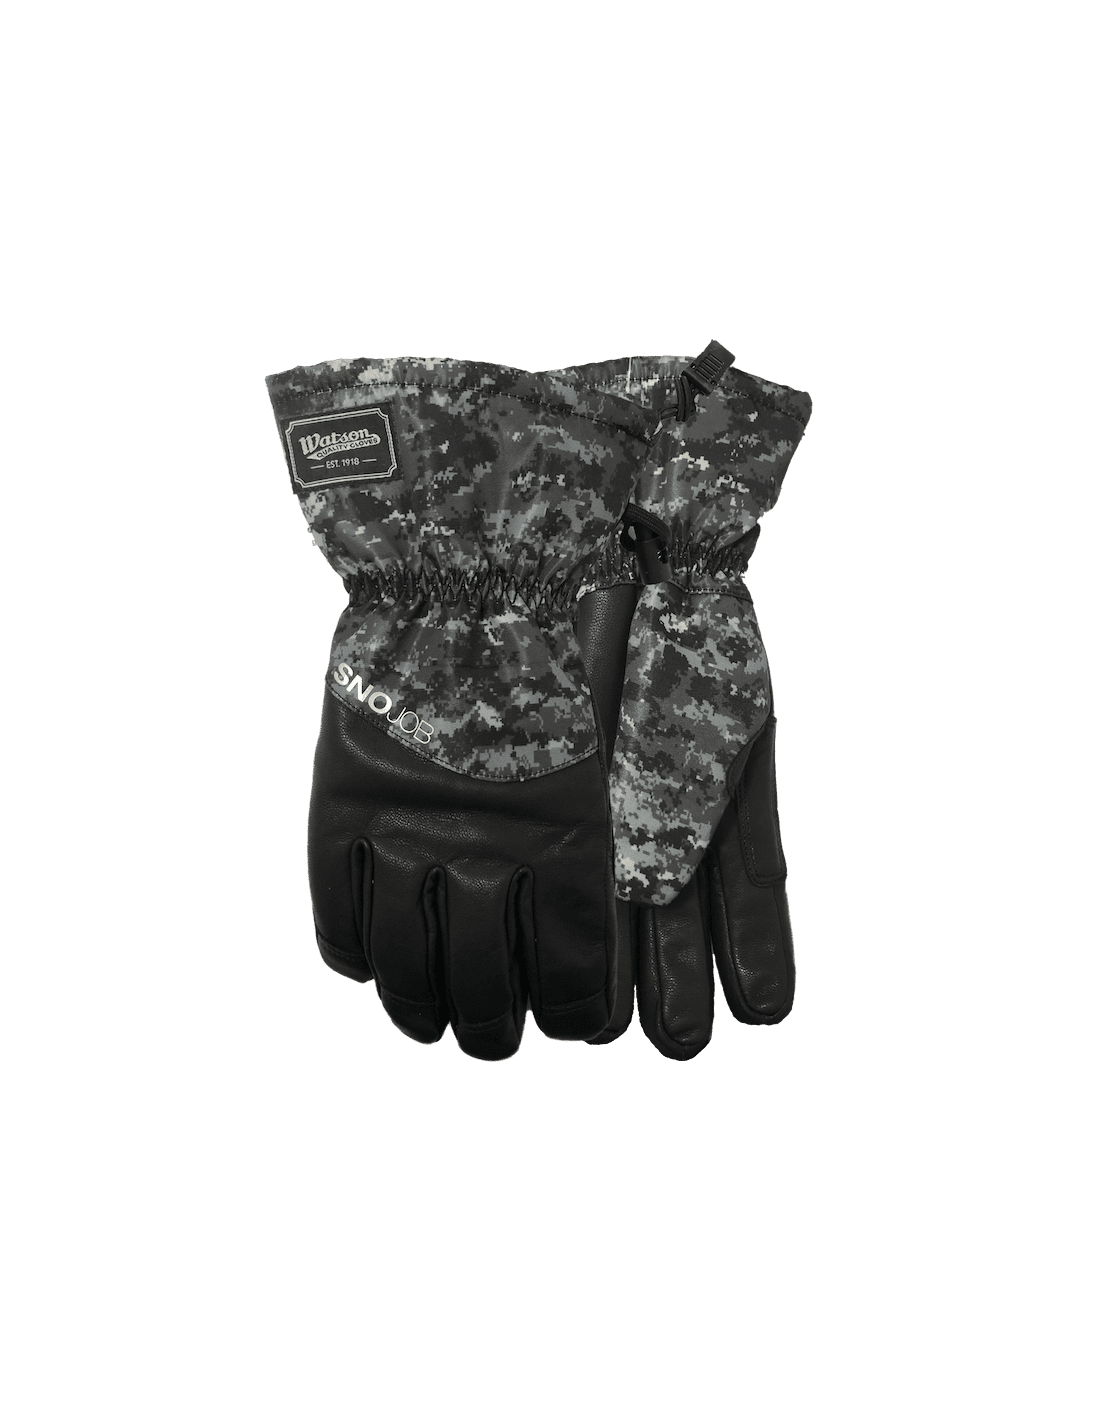 Gants Canadiens de protection contre le froid North of 49° Watson Gloves